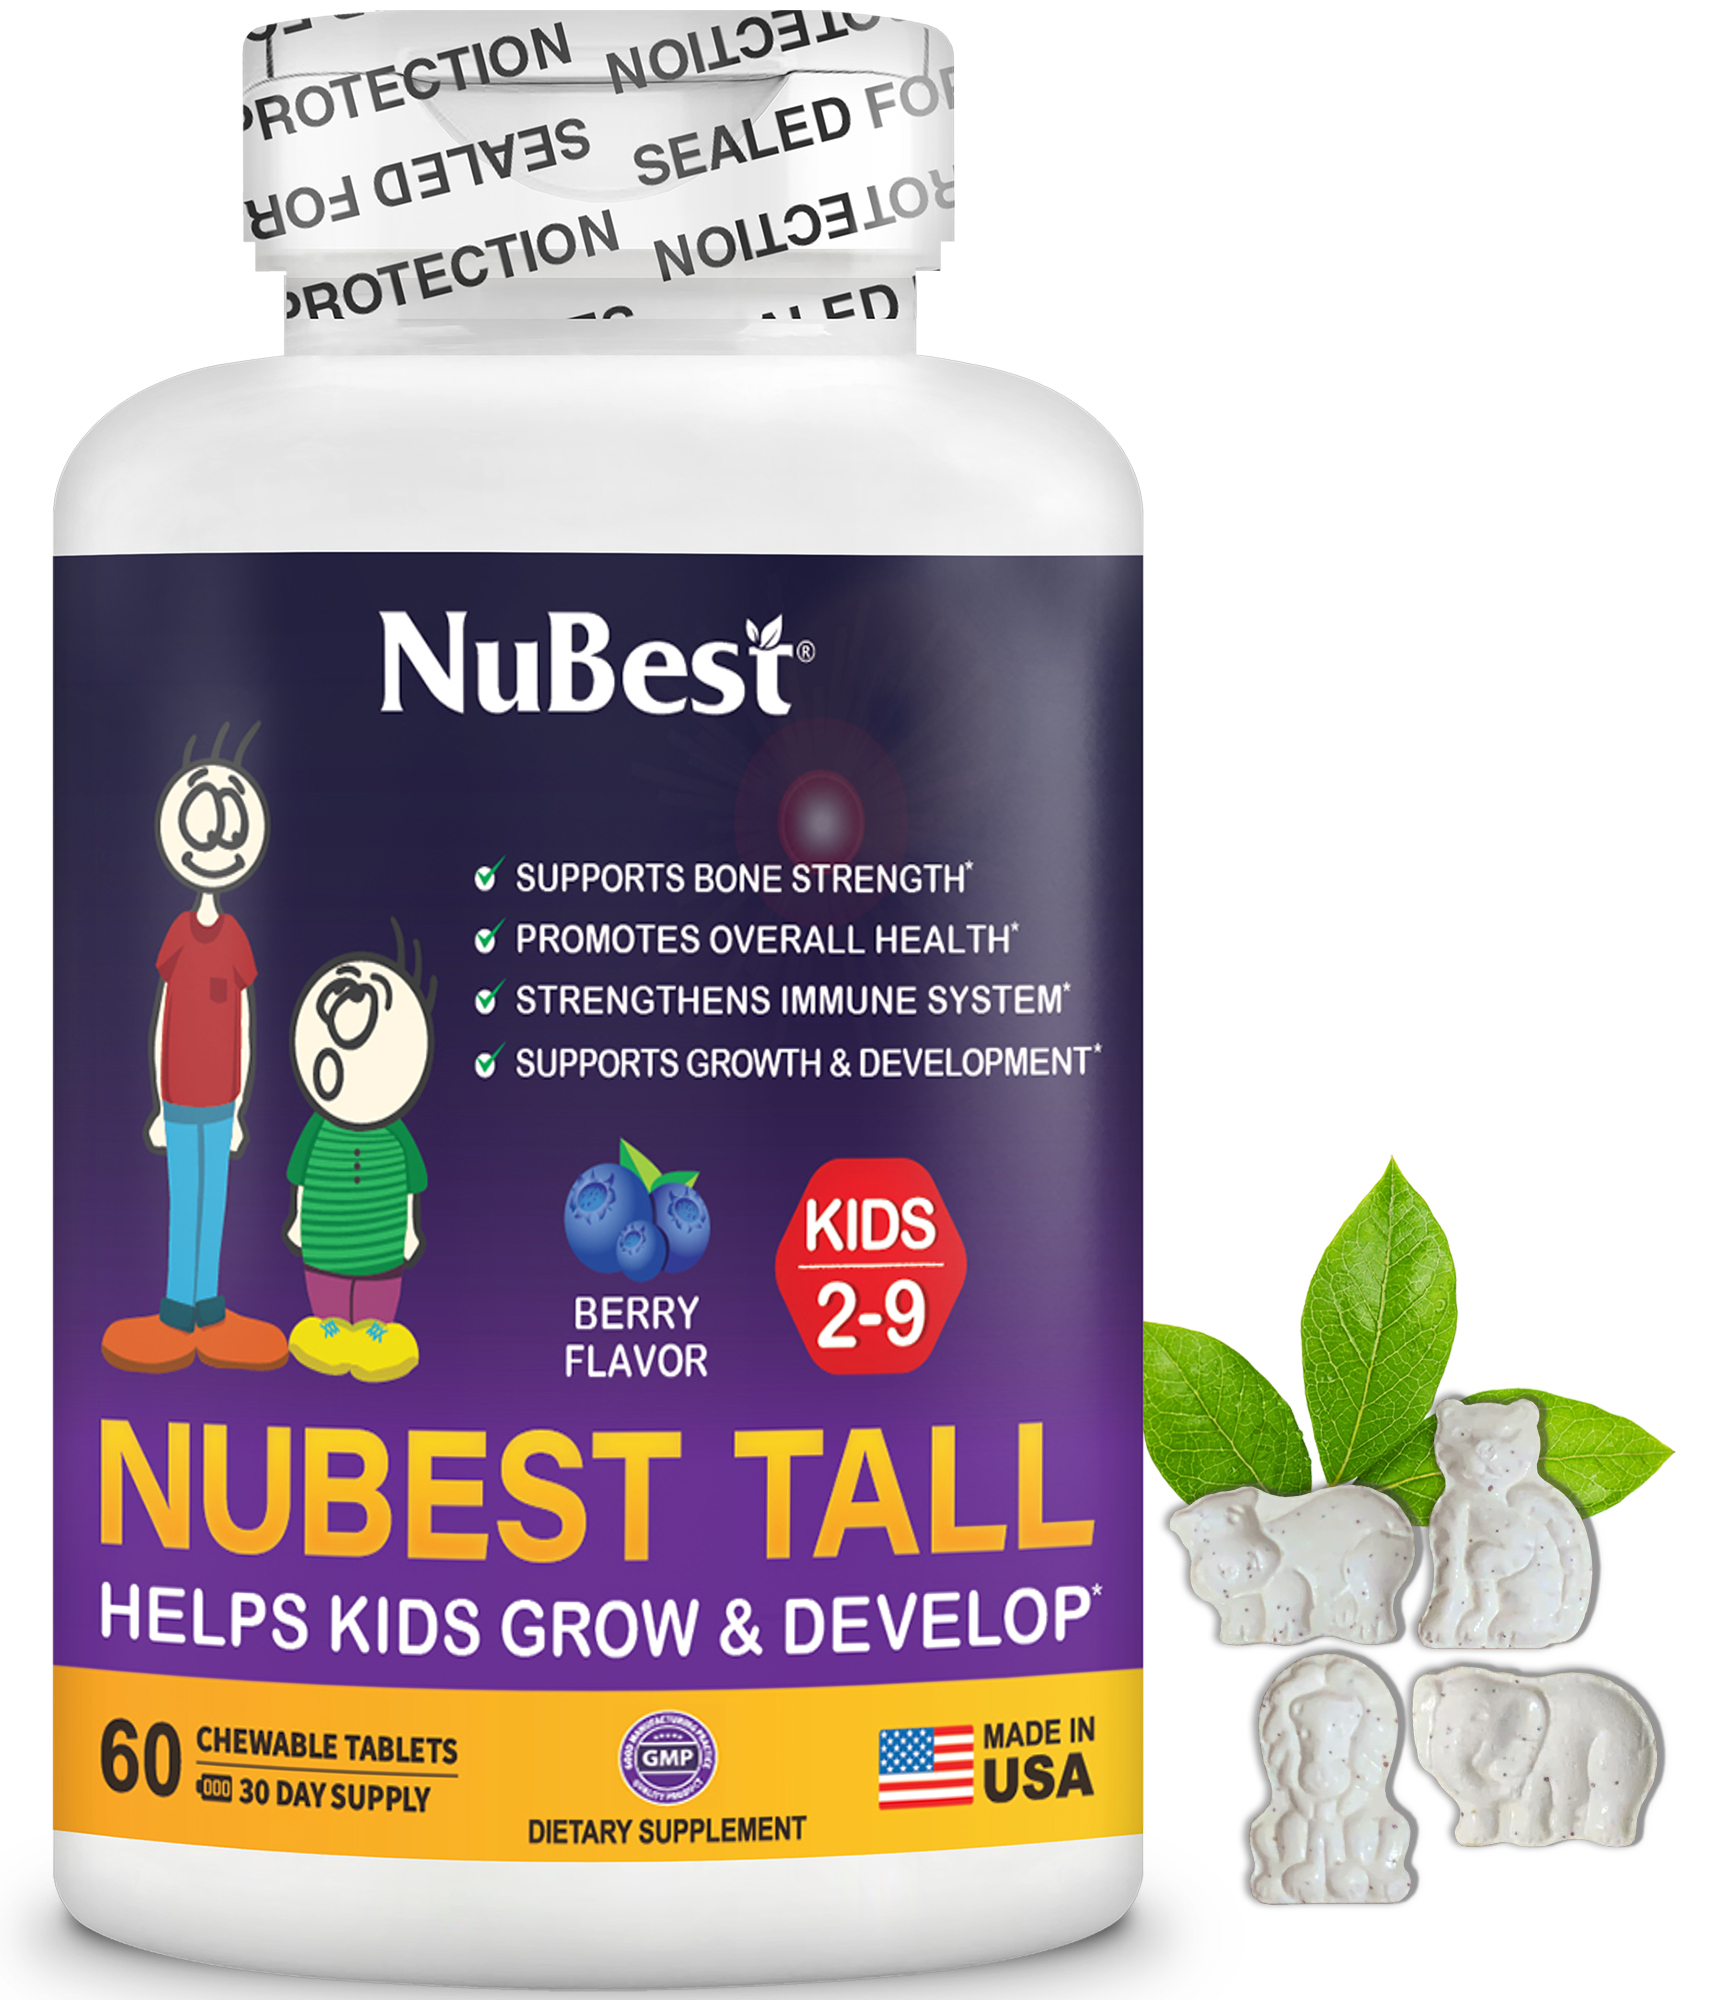 [Combo 3 tặng 1] TPBVSK hỗ trợ tăng Chiều cao 3 NuBest Tall (từ 5-20 Tuổi) tặng 1 NuBest Tall Kids (từ 2-9 Tuổi)